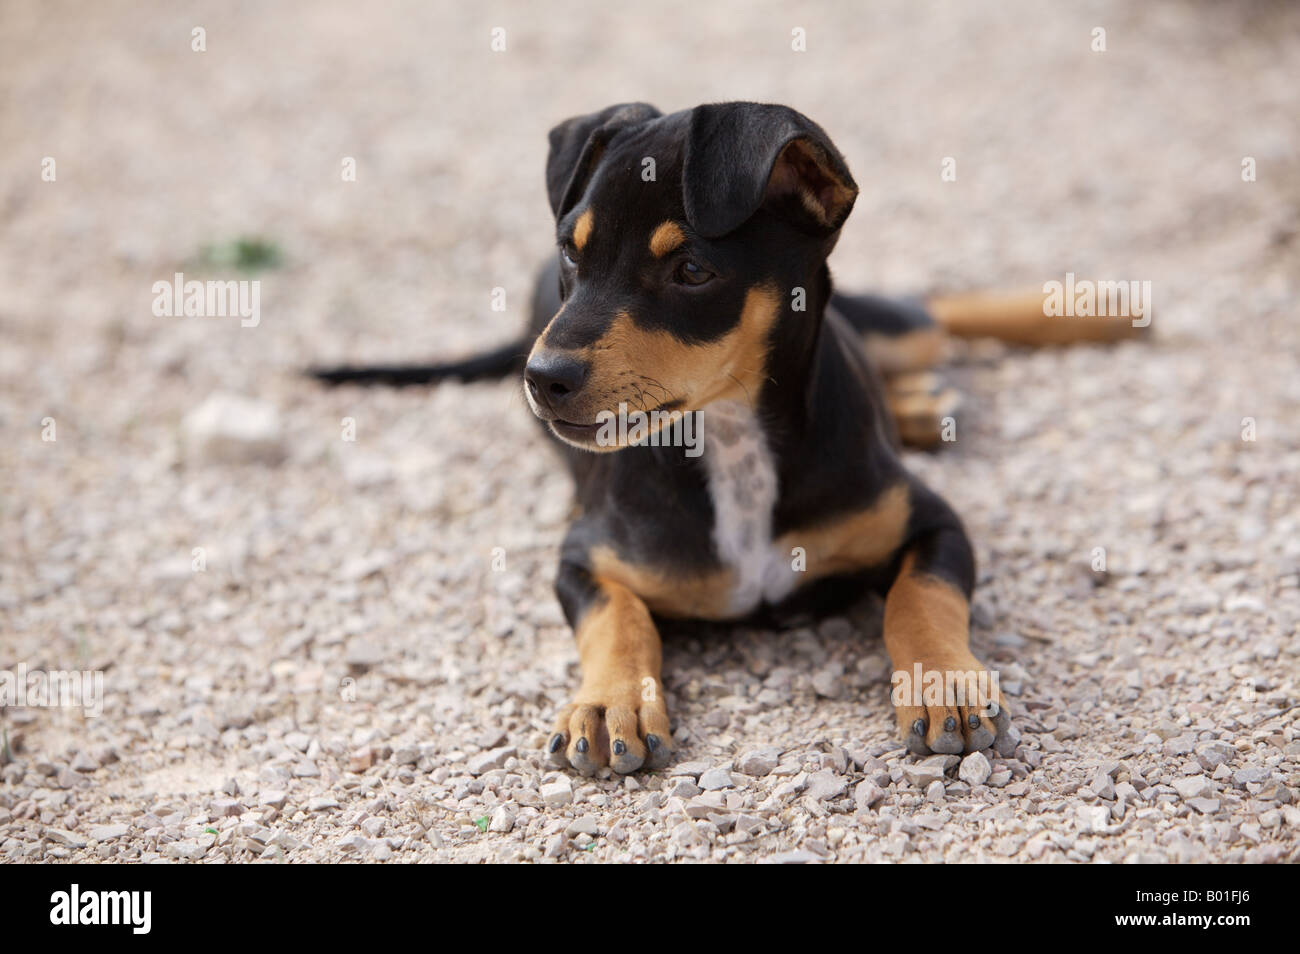 Ratero Ca Rater Mallorquin Mallorcan Dog Race Subform Of The Stock Photo Alamy